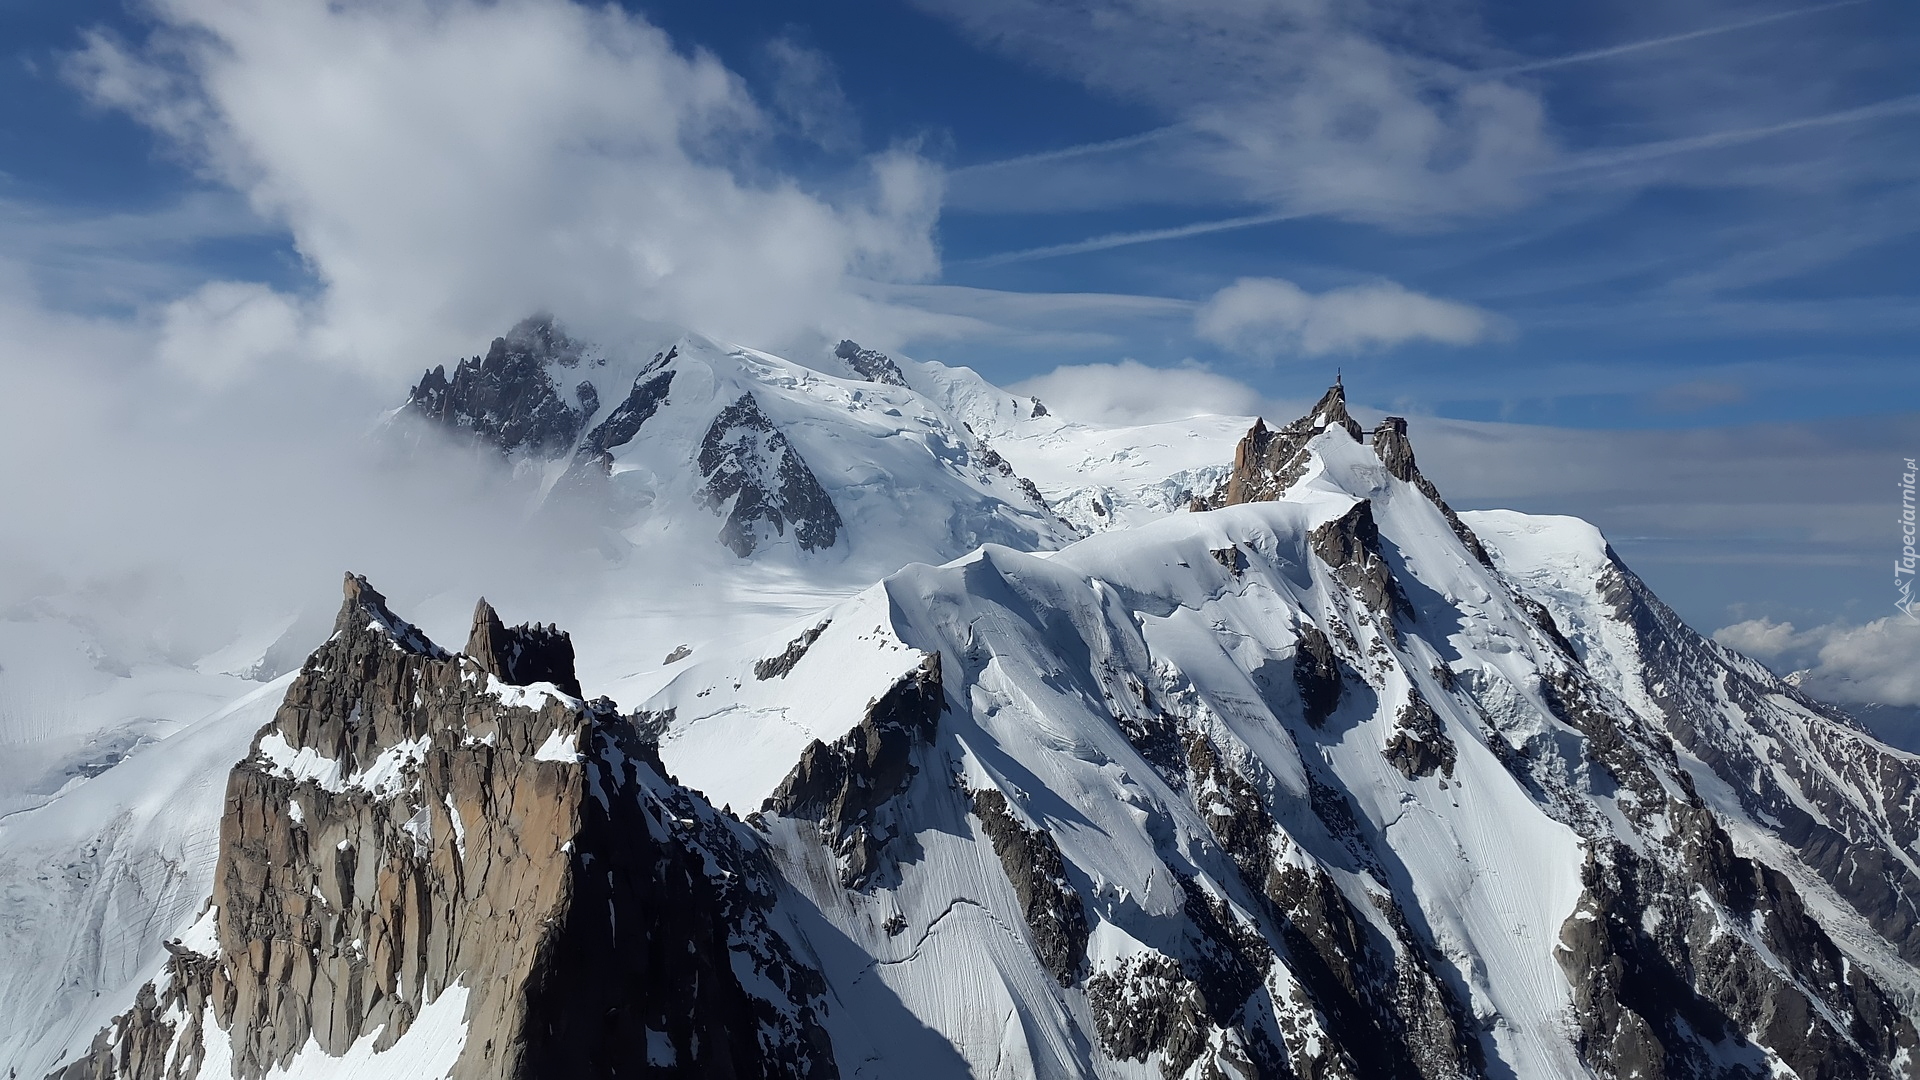 Zima, Góry, Aiquilles de Chamonix, Mont Blanc, Szczyt Aiguille du Midi, Śnieg, Chmury, Francja